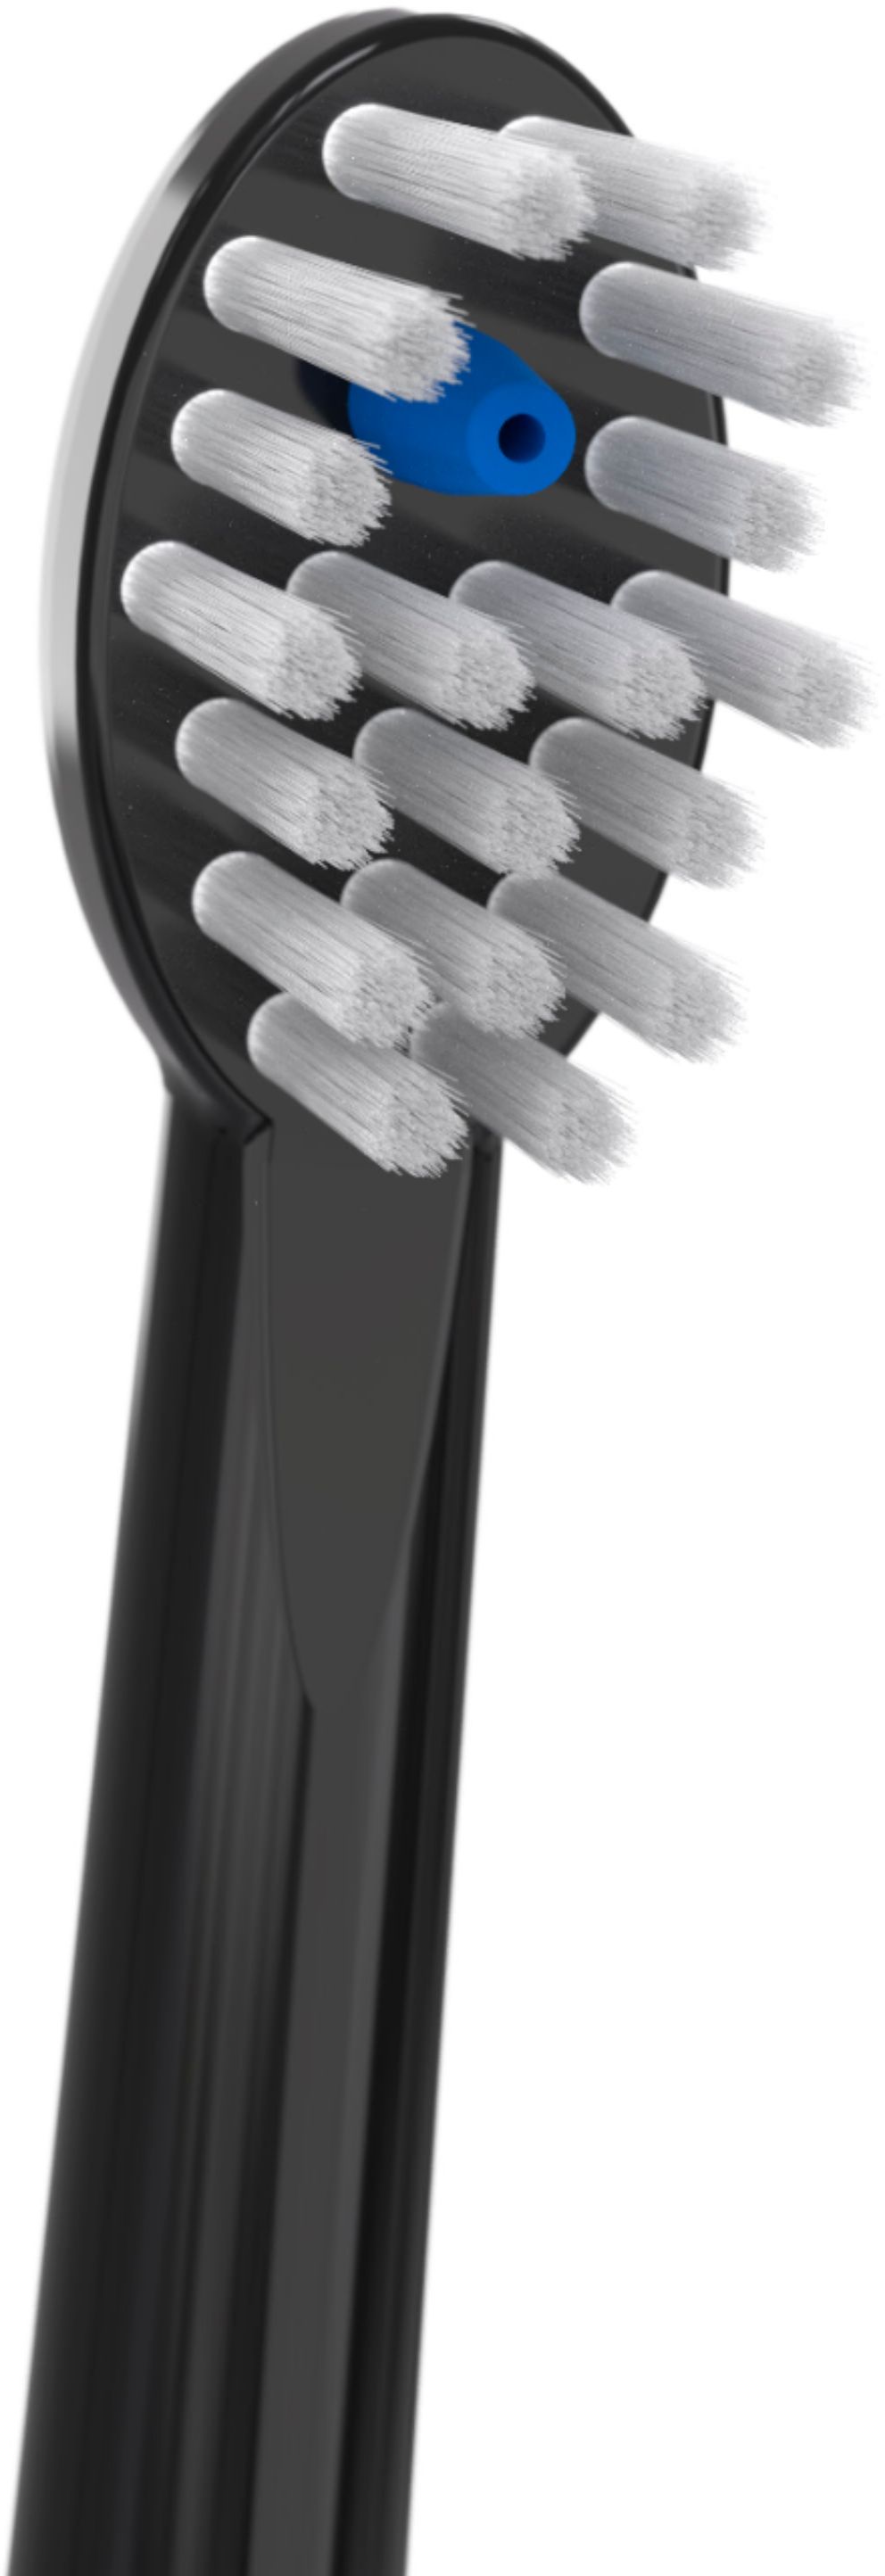 Left View: Waterpik Sonic-Fusion Recharegable Flossing Toothbrush - Black/Chrome